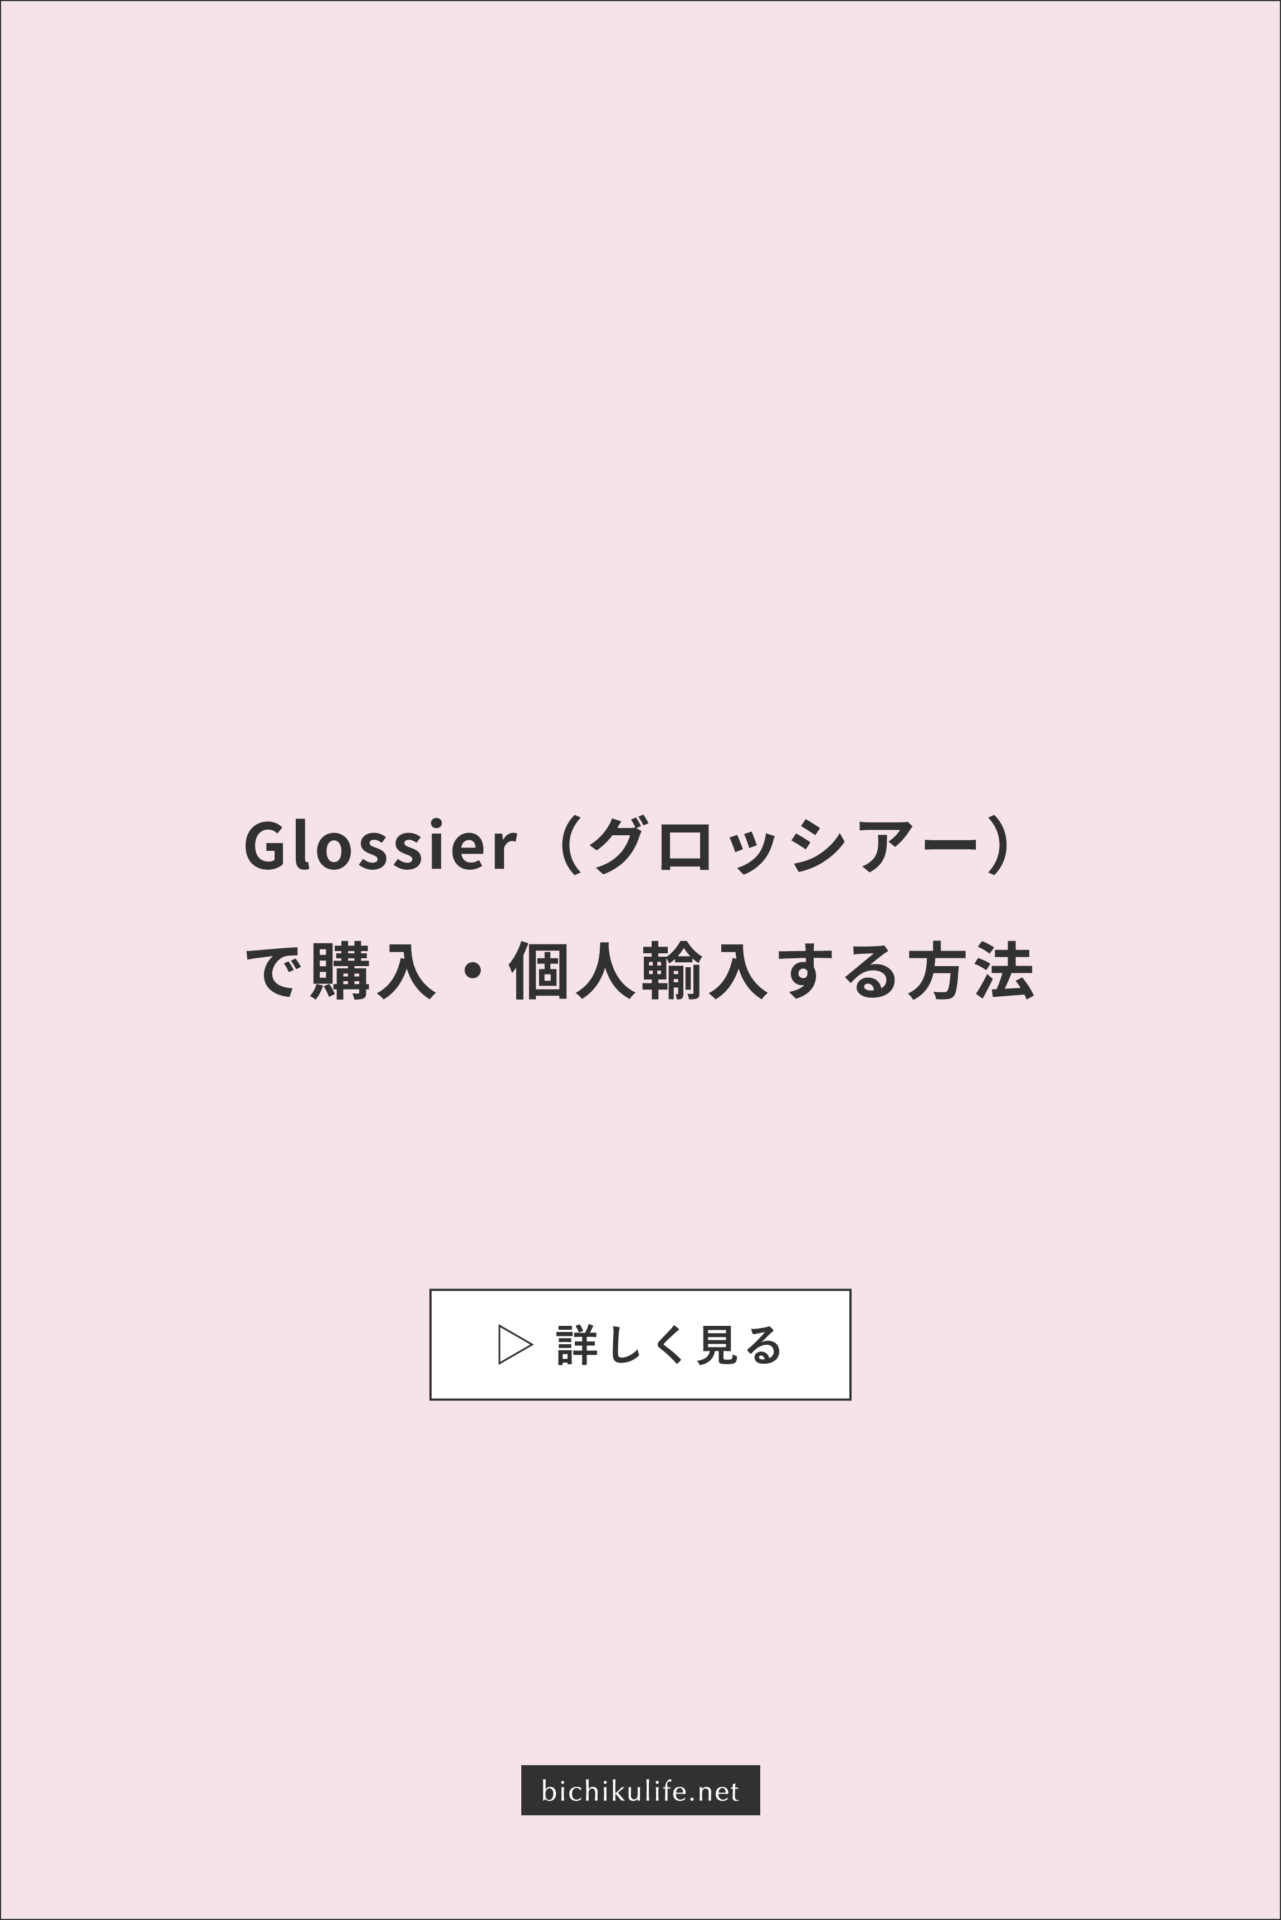 Glossier グロッシアーのコスメを海外公式通販サイトで購入する方法